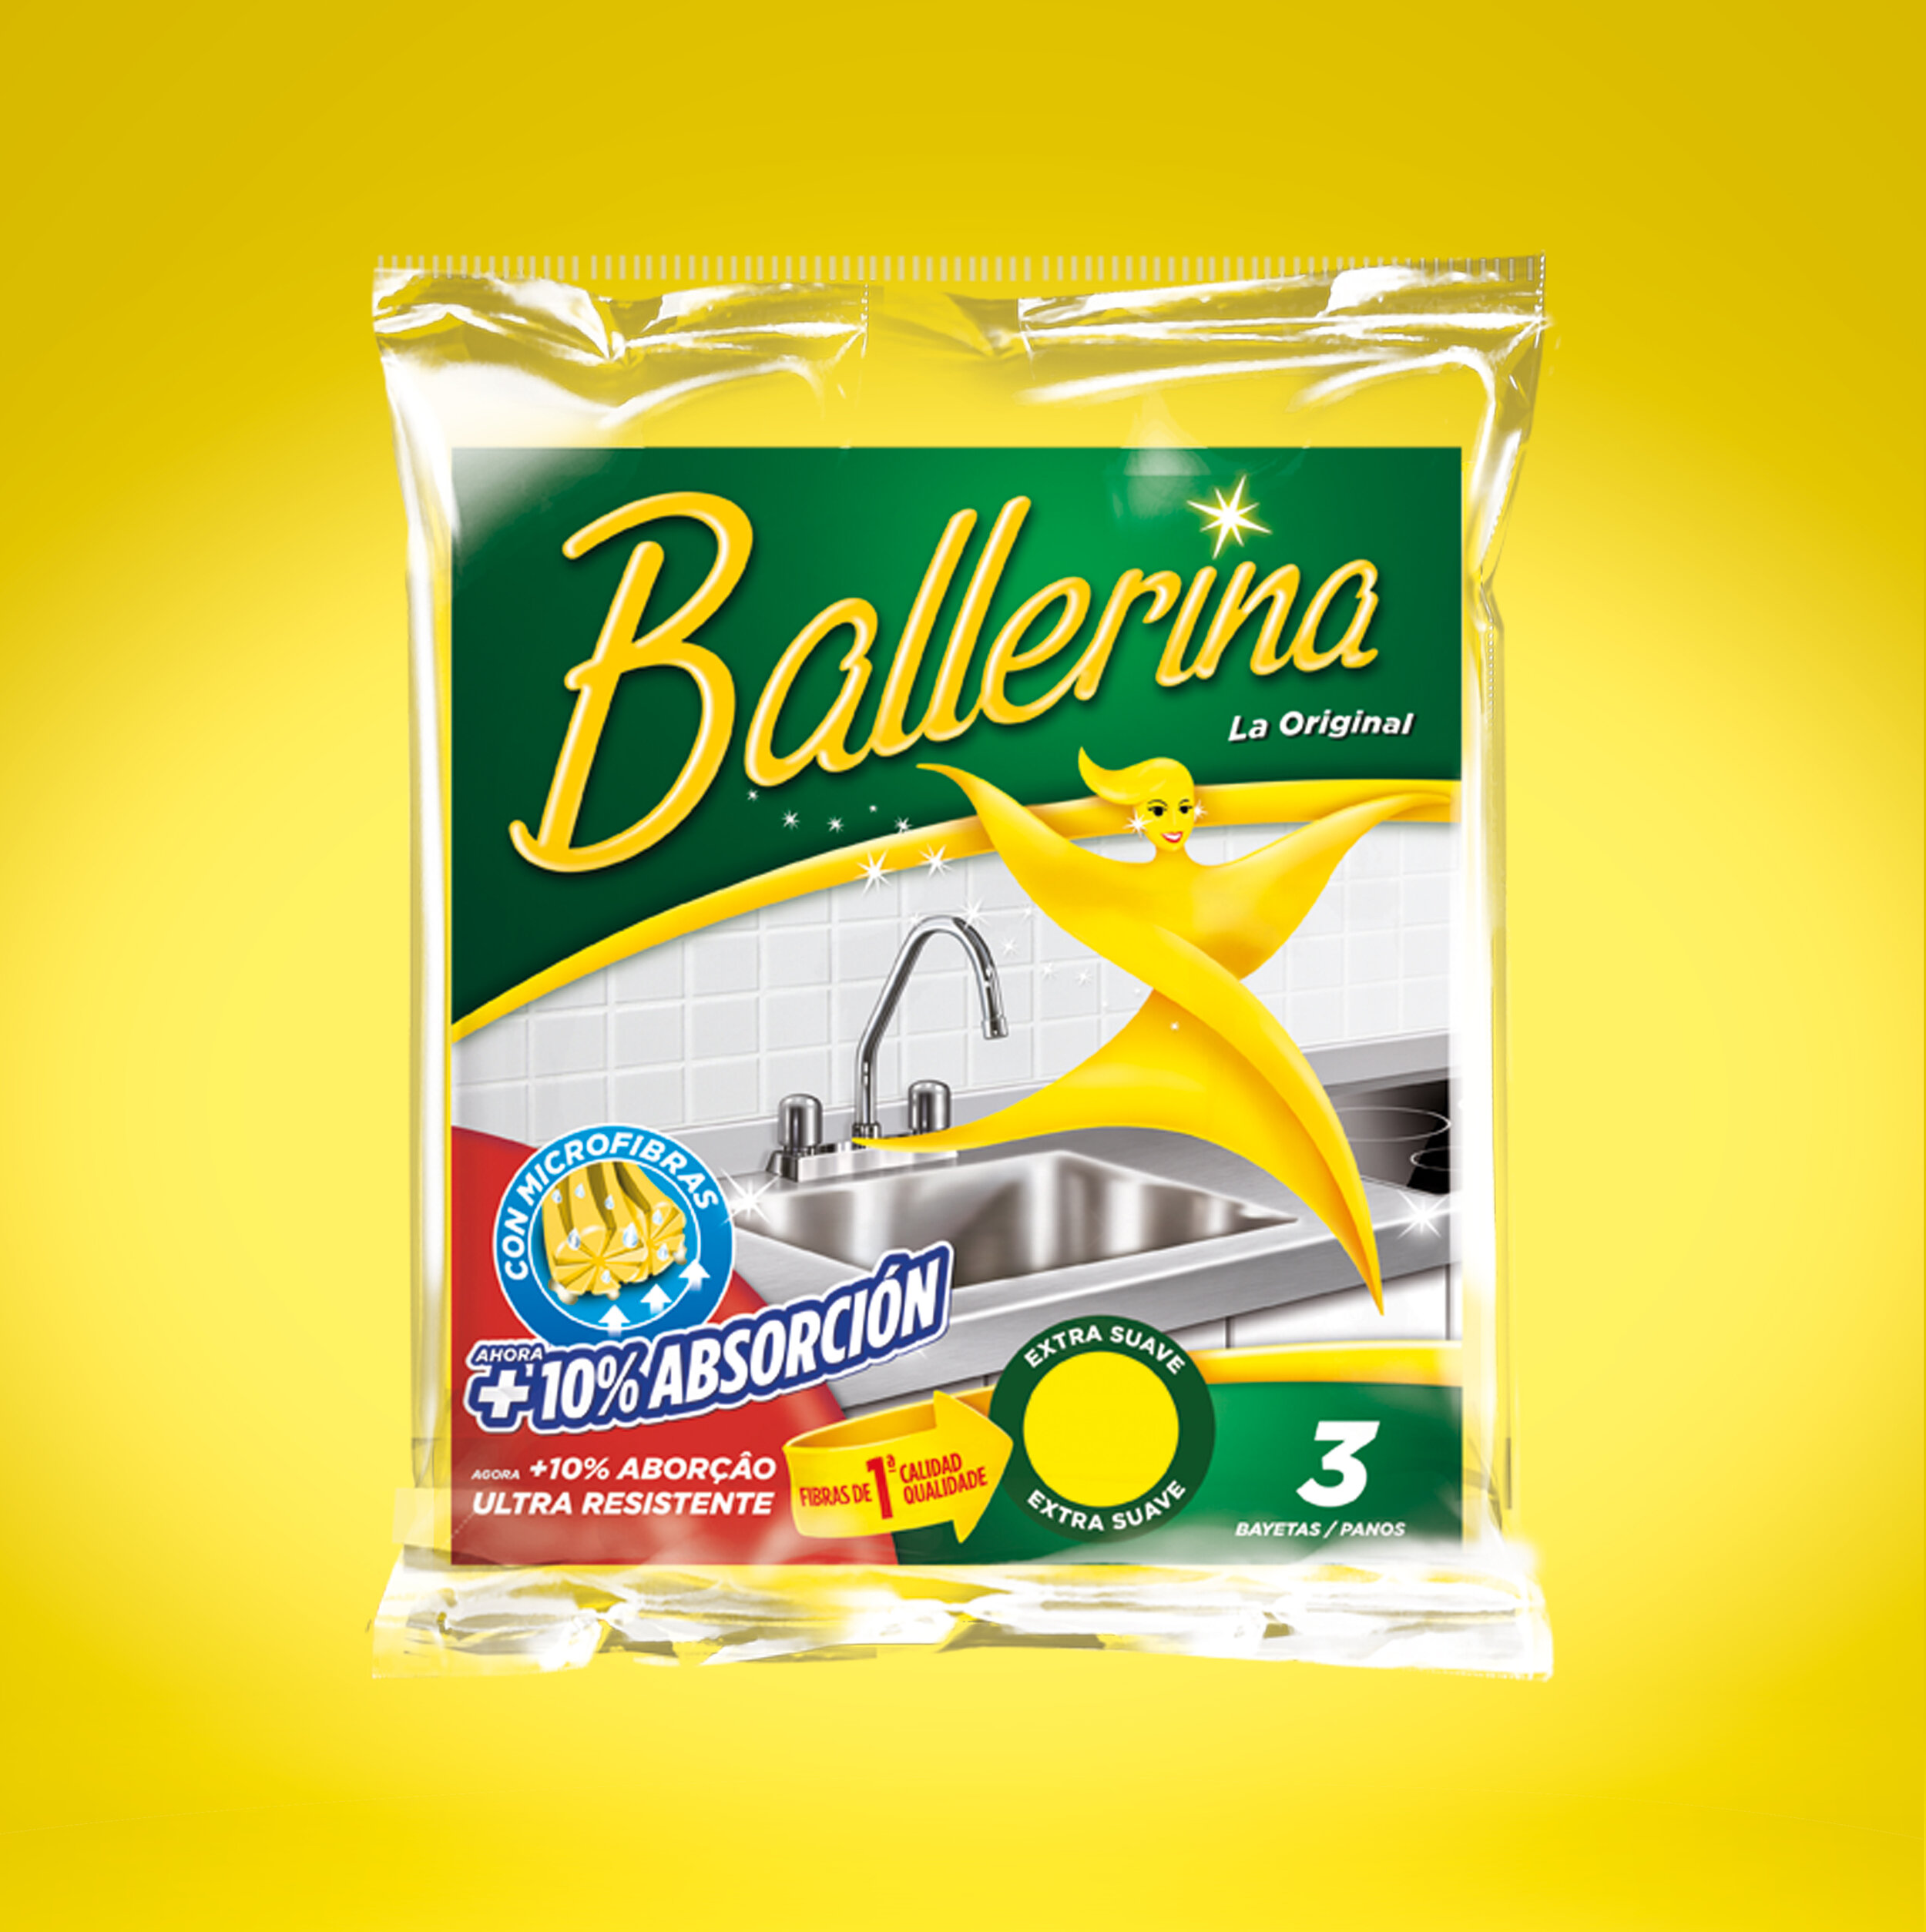 Packaging-Ballerina_01.jpg